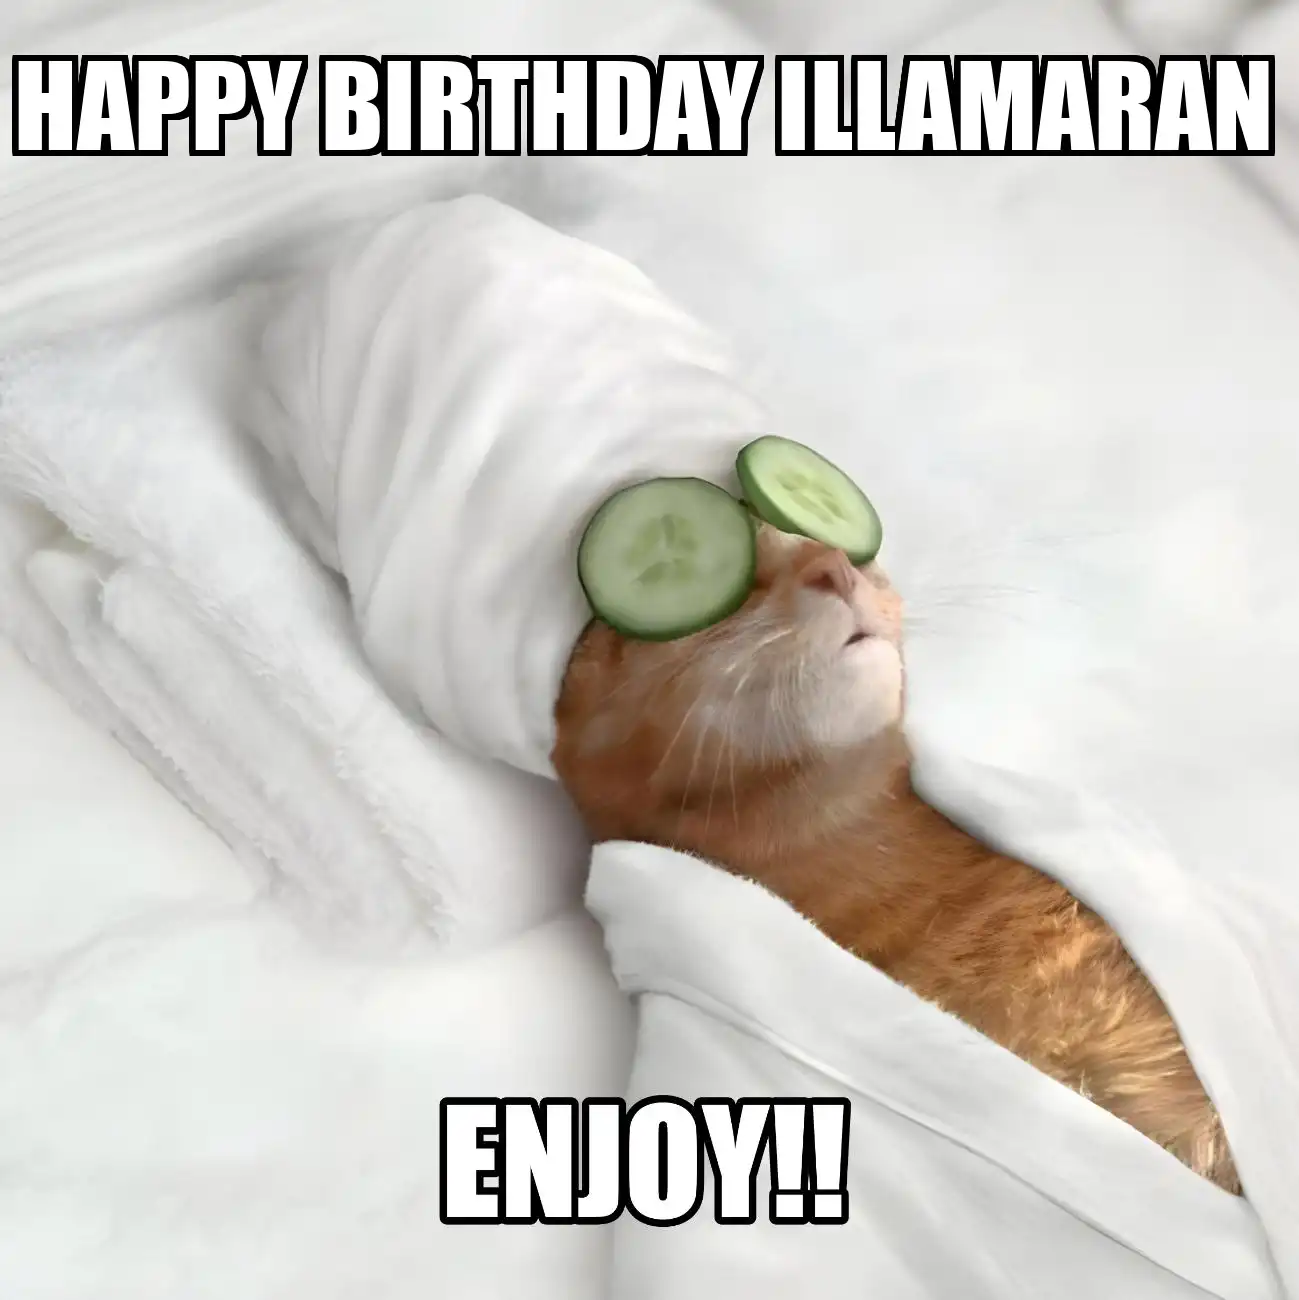 Happy Birthday Illamaran Enjoy Cat Meme